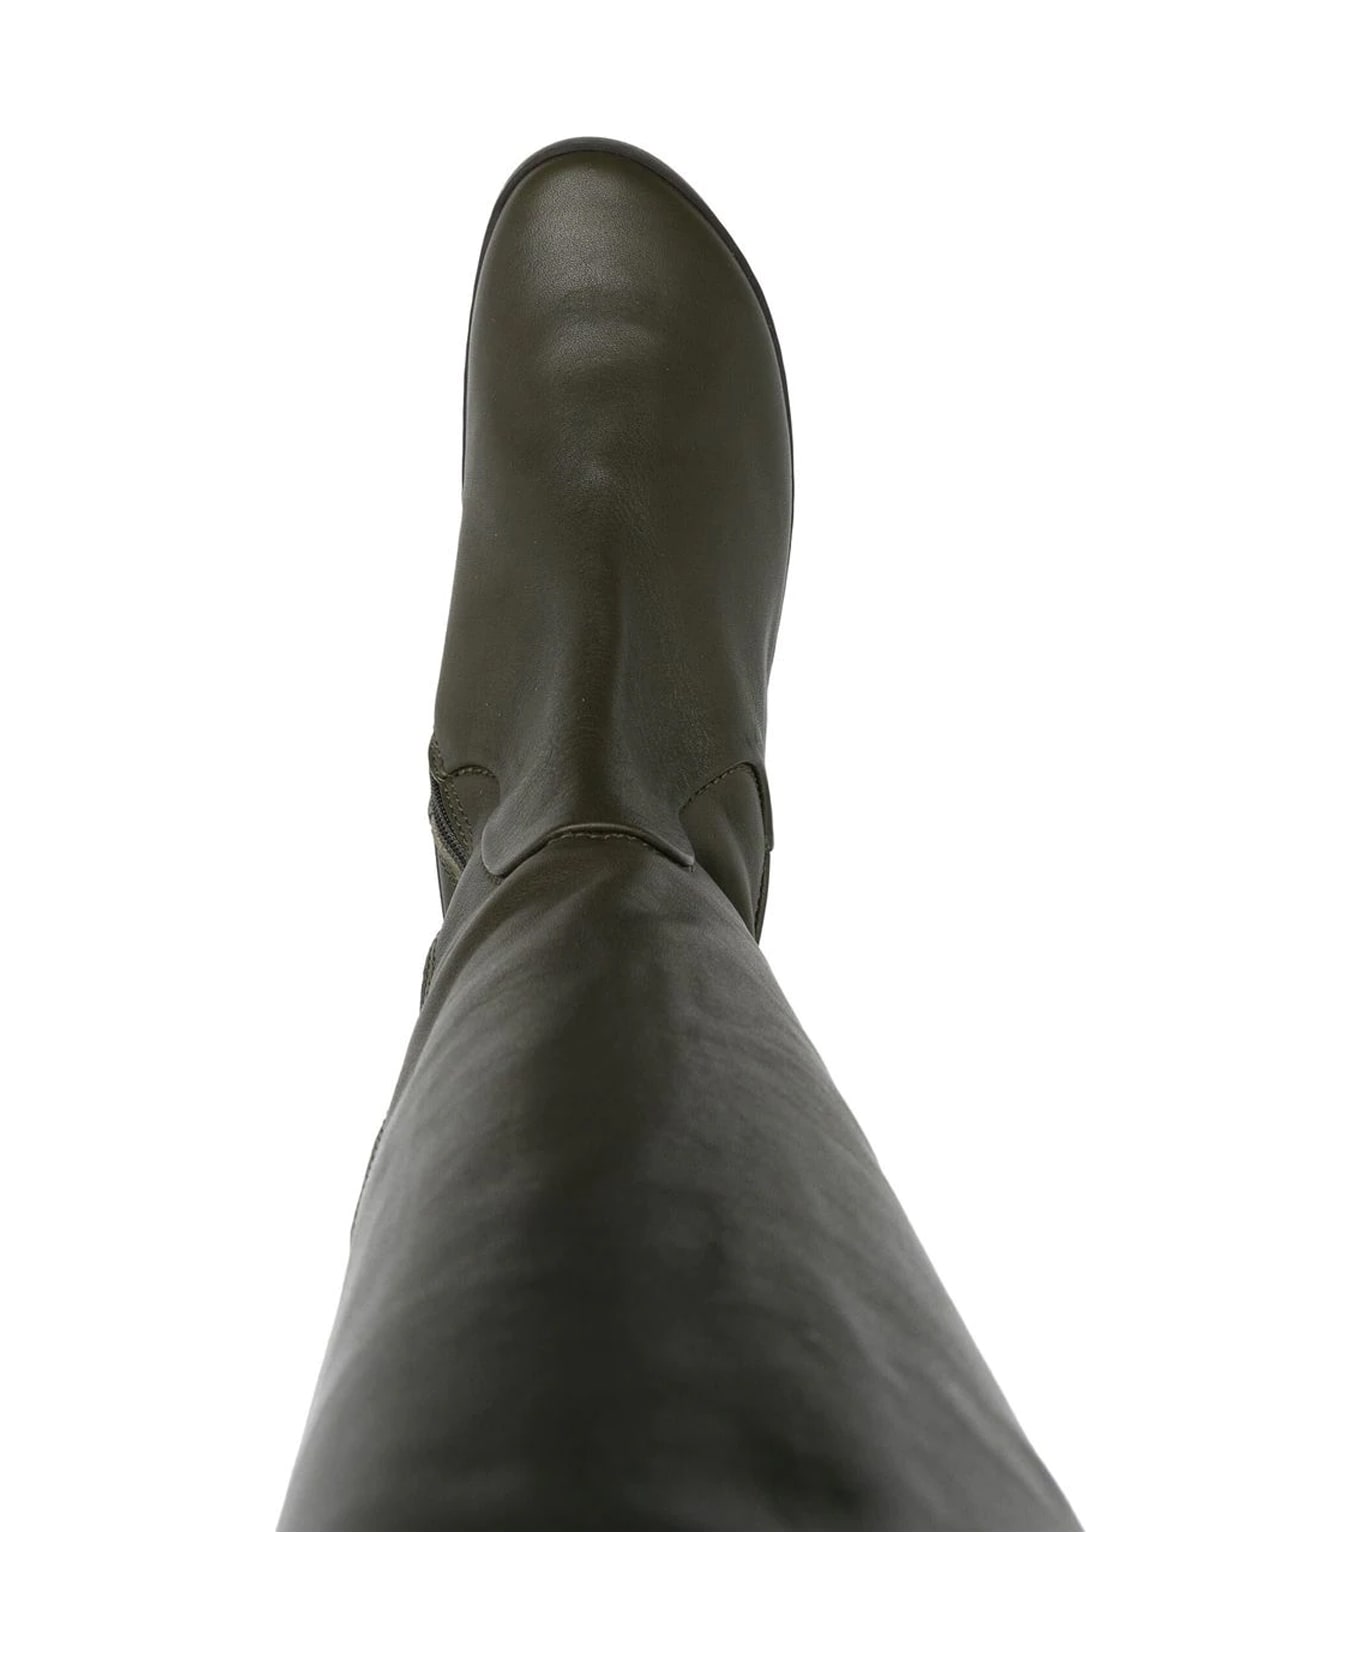 Trippen Whistle Boots - Khaki